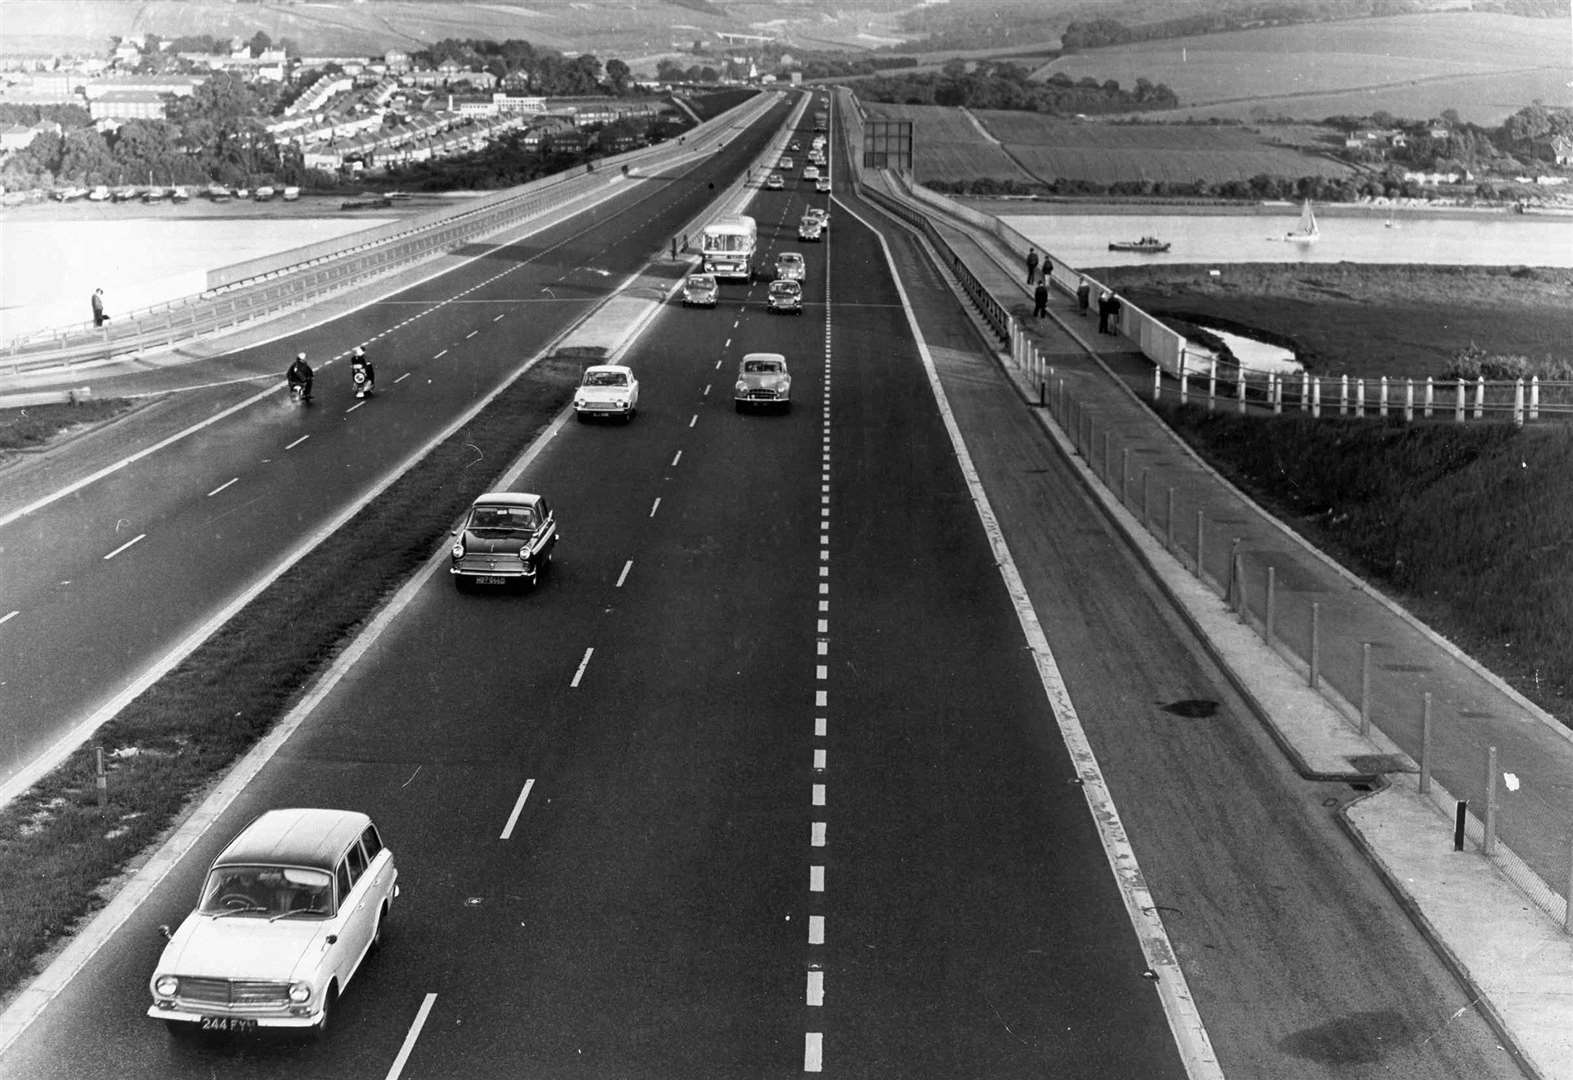 The M2 bridge in 1965. Traffic is seldom so light today